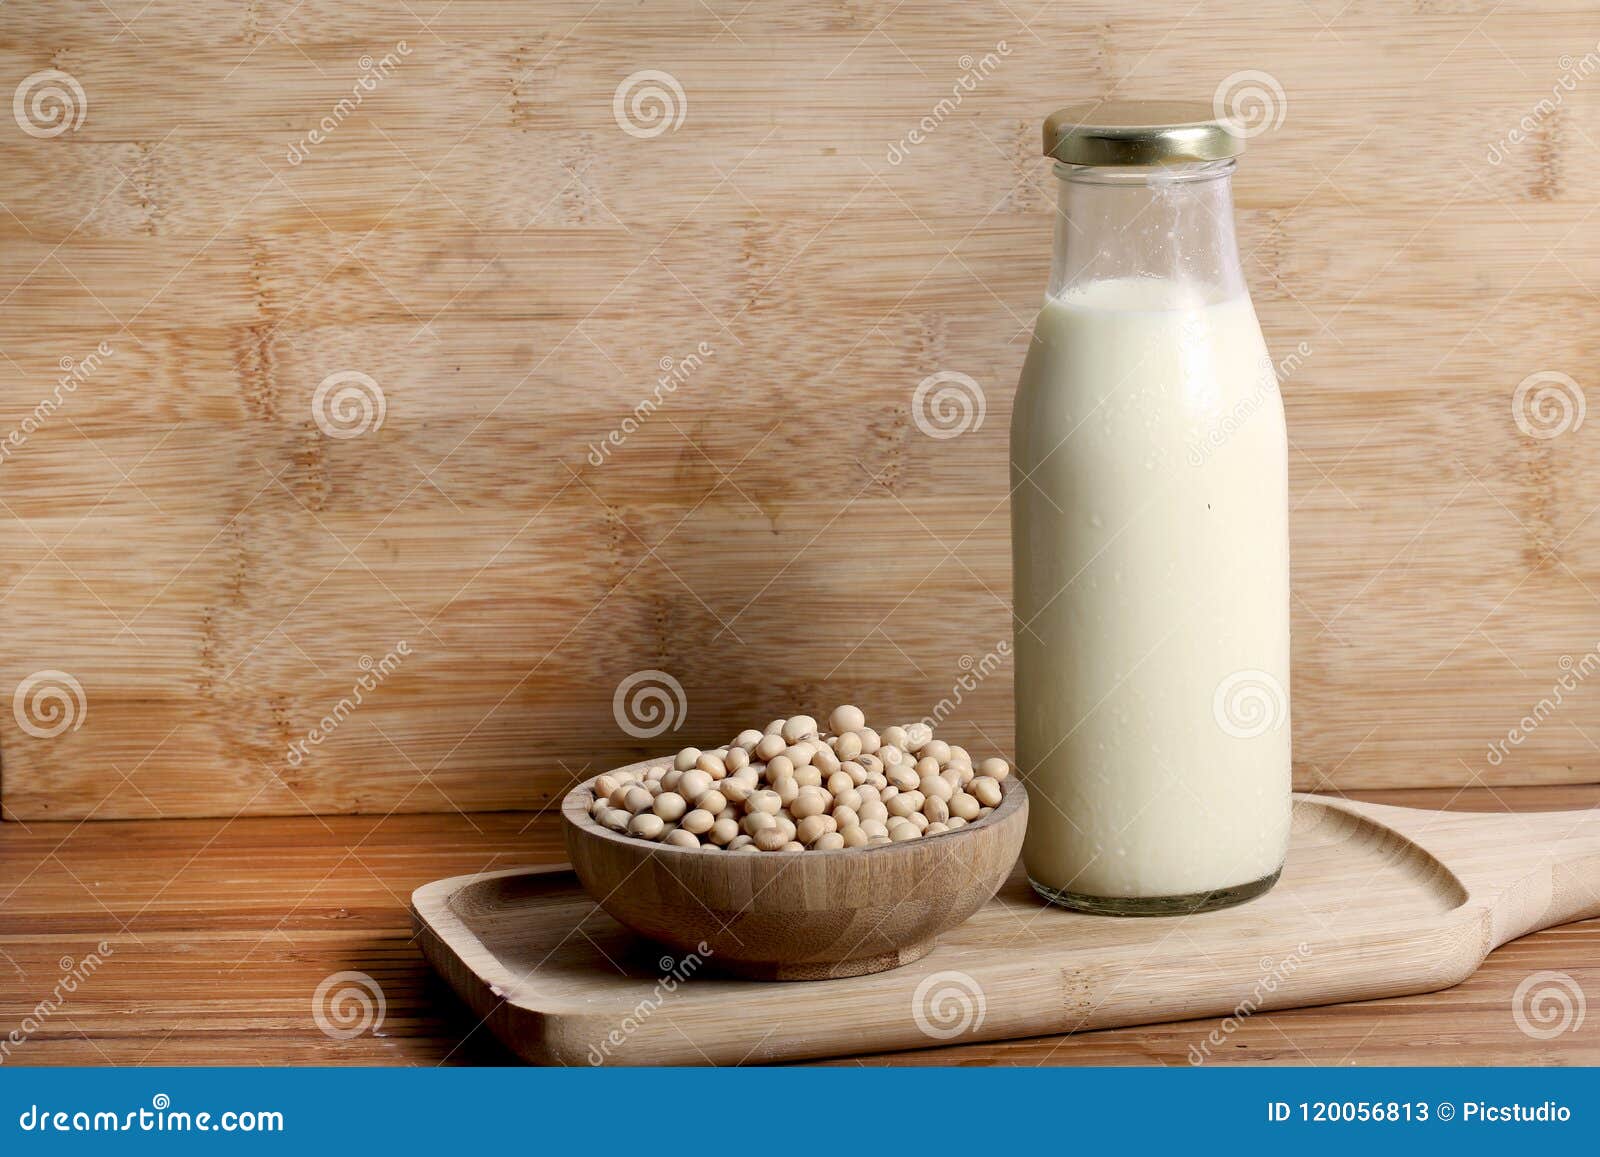 soya-bean seeds and milk